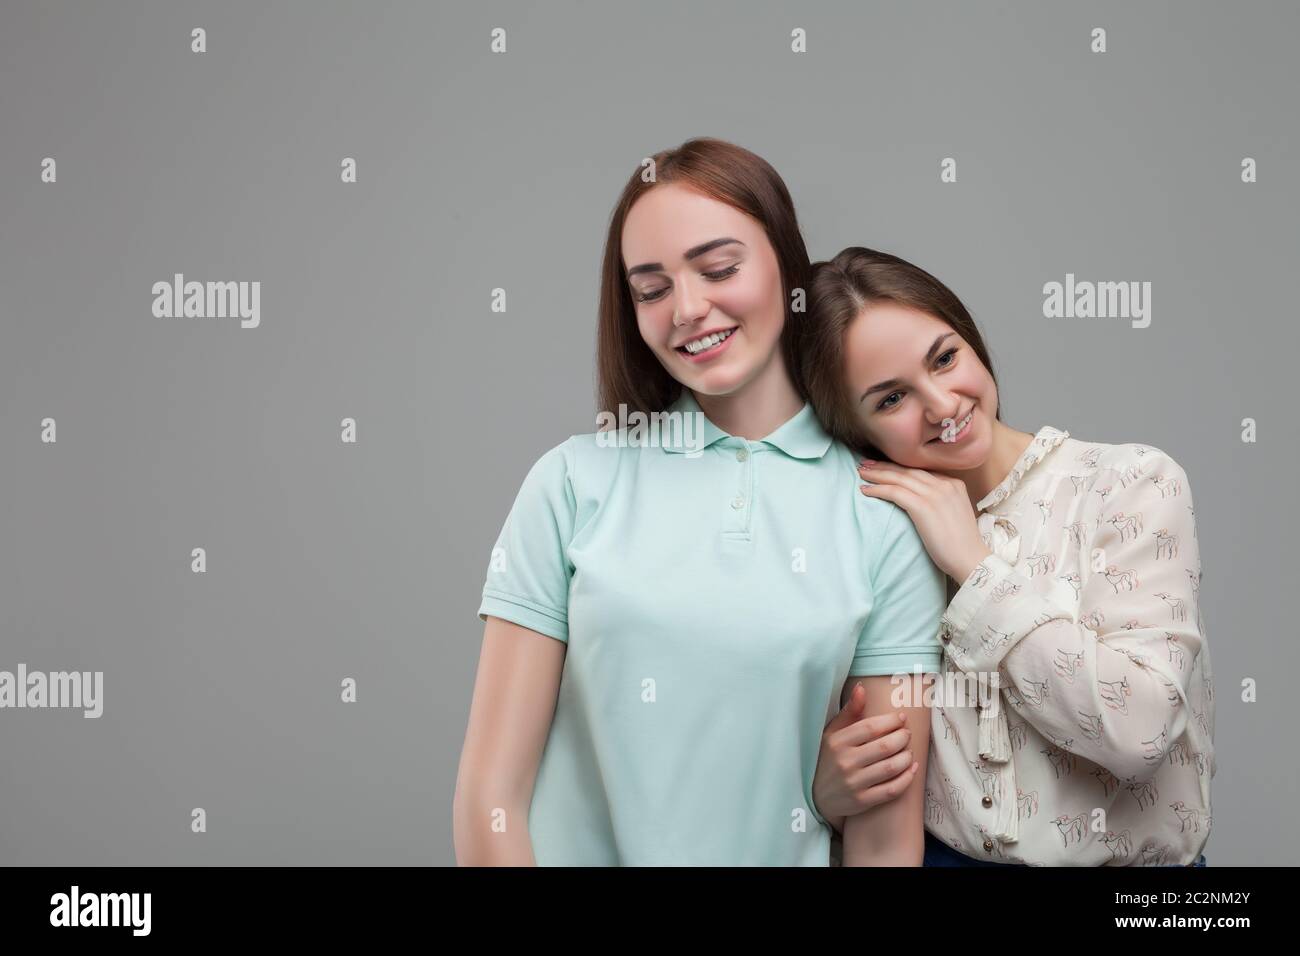 Two women hugs together, studio photo shoot. Female friendship Stock Photo